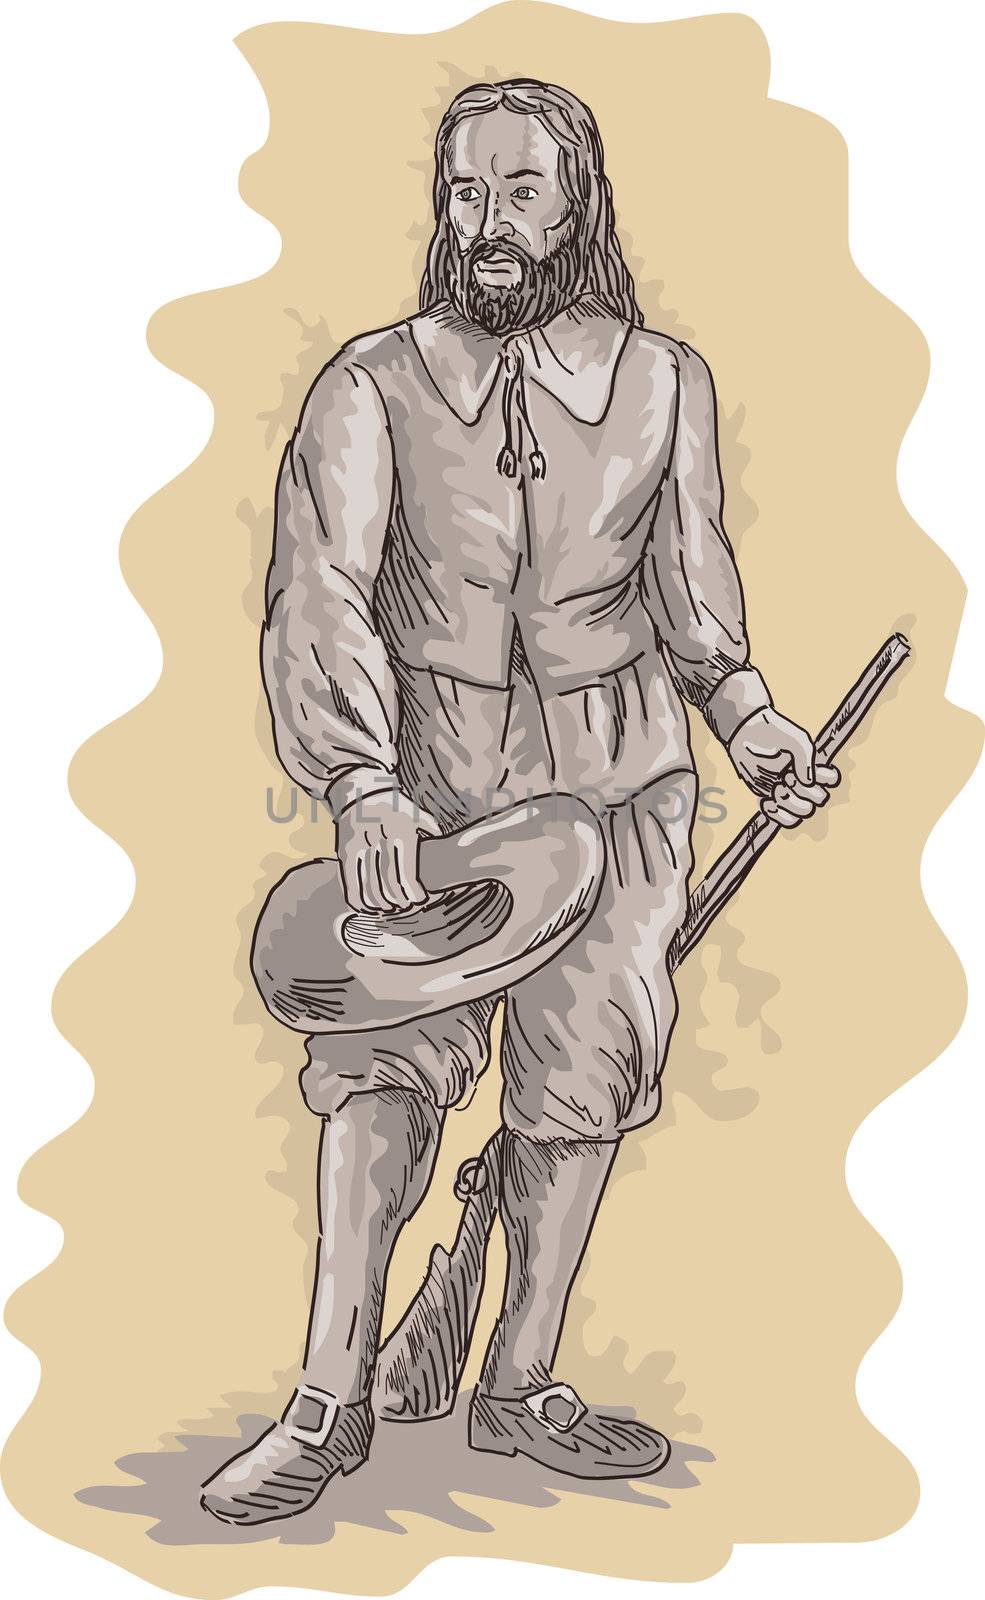 Pilgrim standing holding a musket rifle by patrimonio